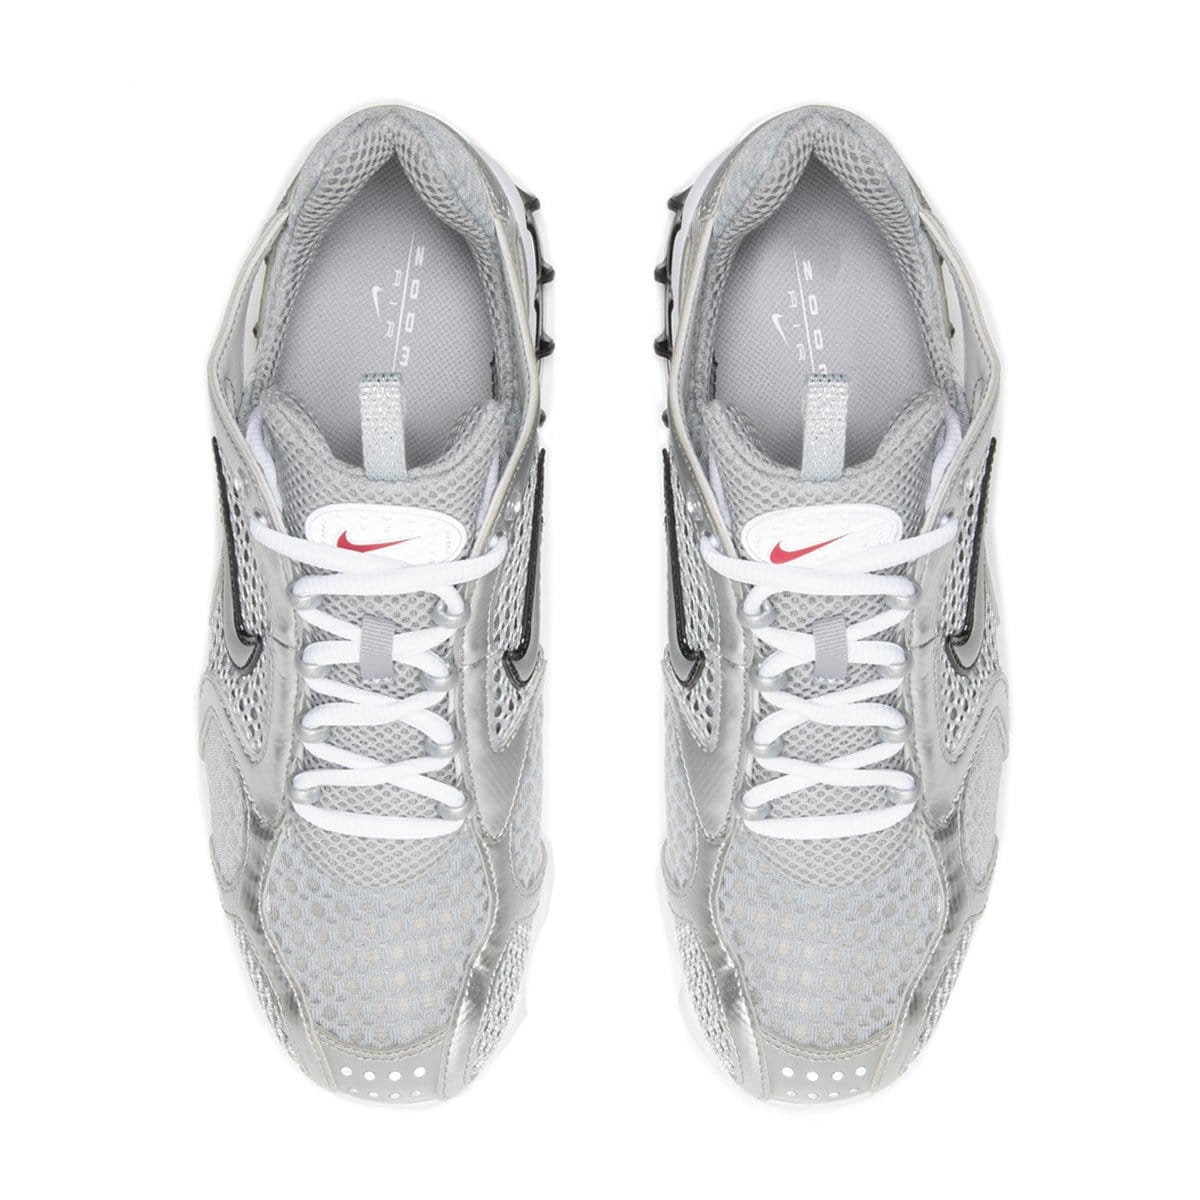 Nike Shoes AIR ZOOM SPIRIDON CAGE 2